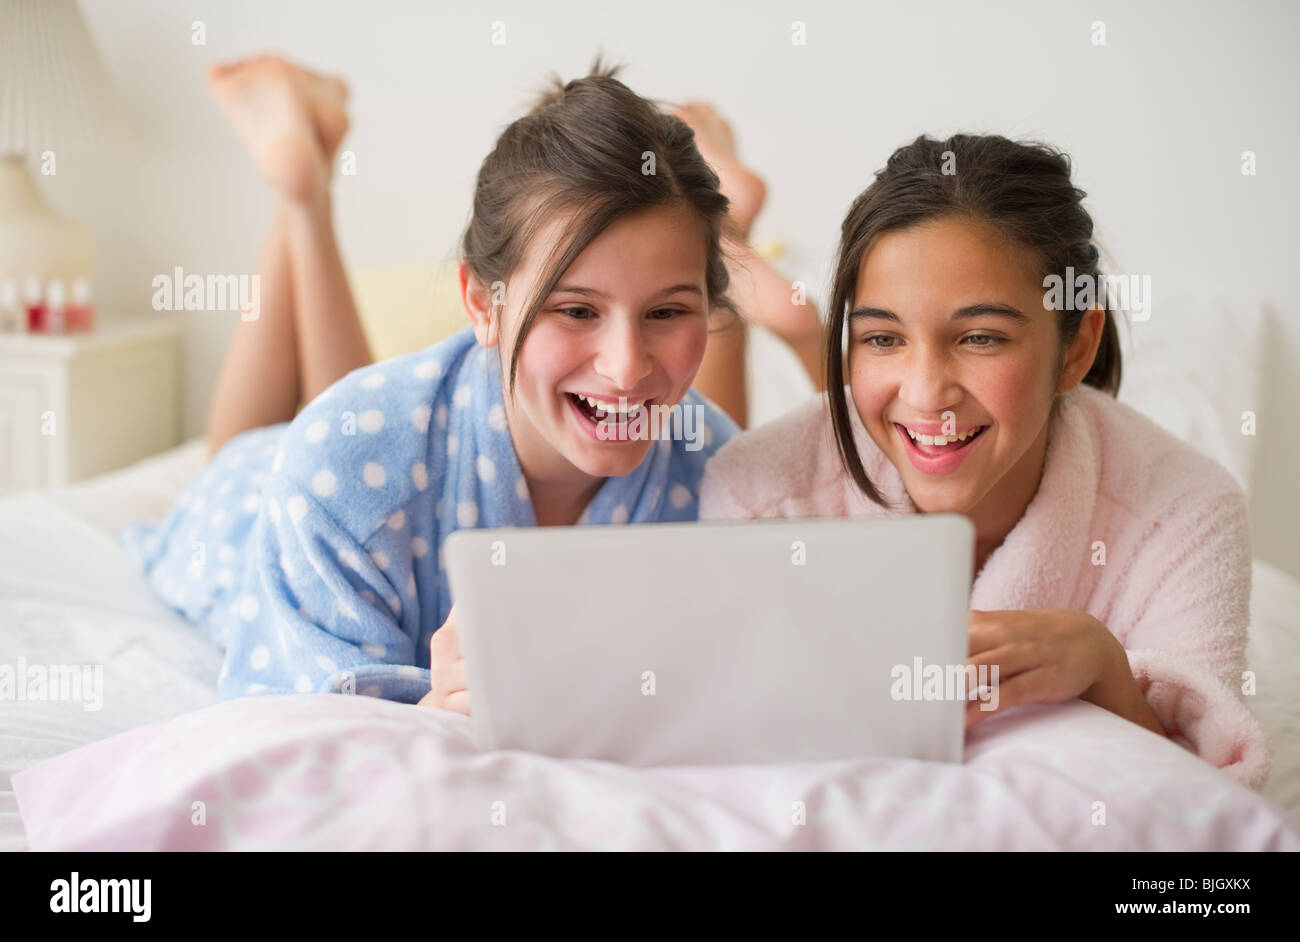 Girls looking at laptop Stock Photo